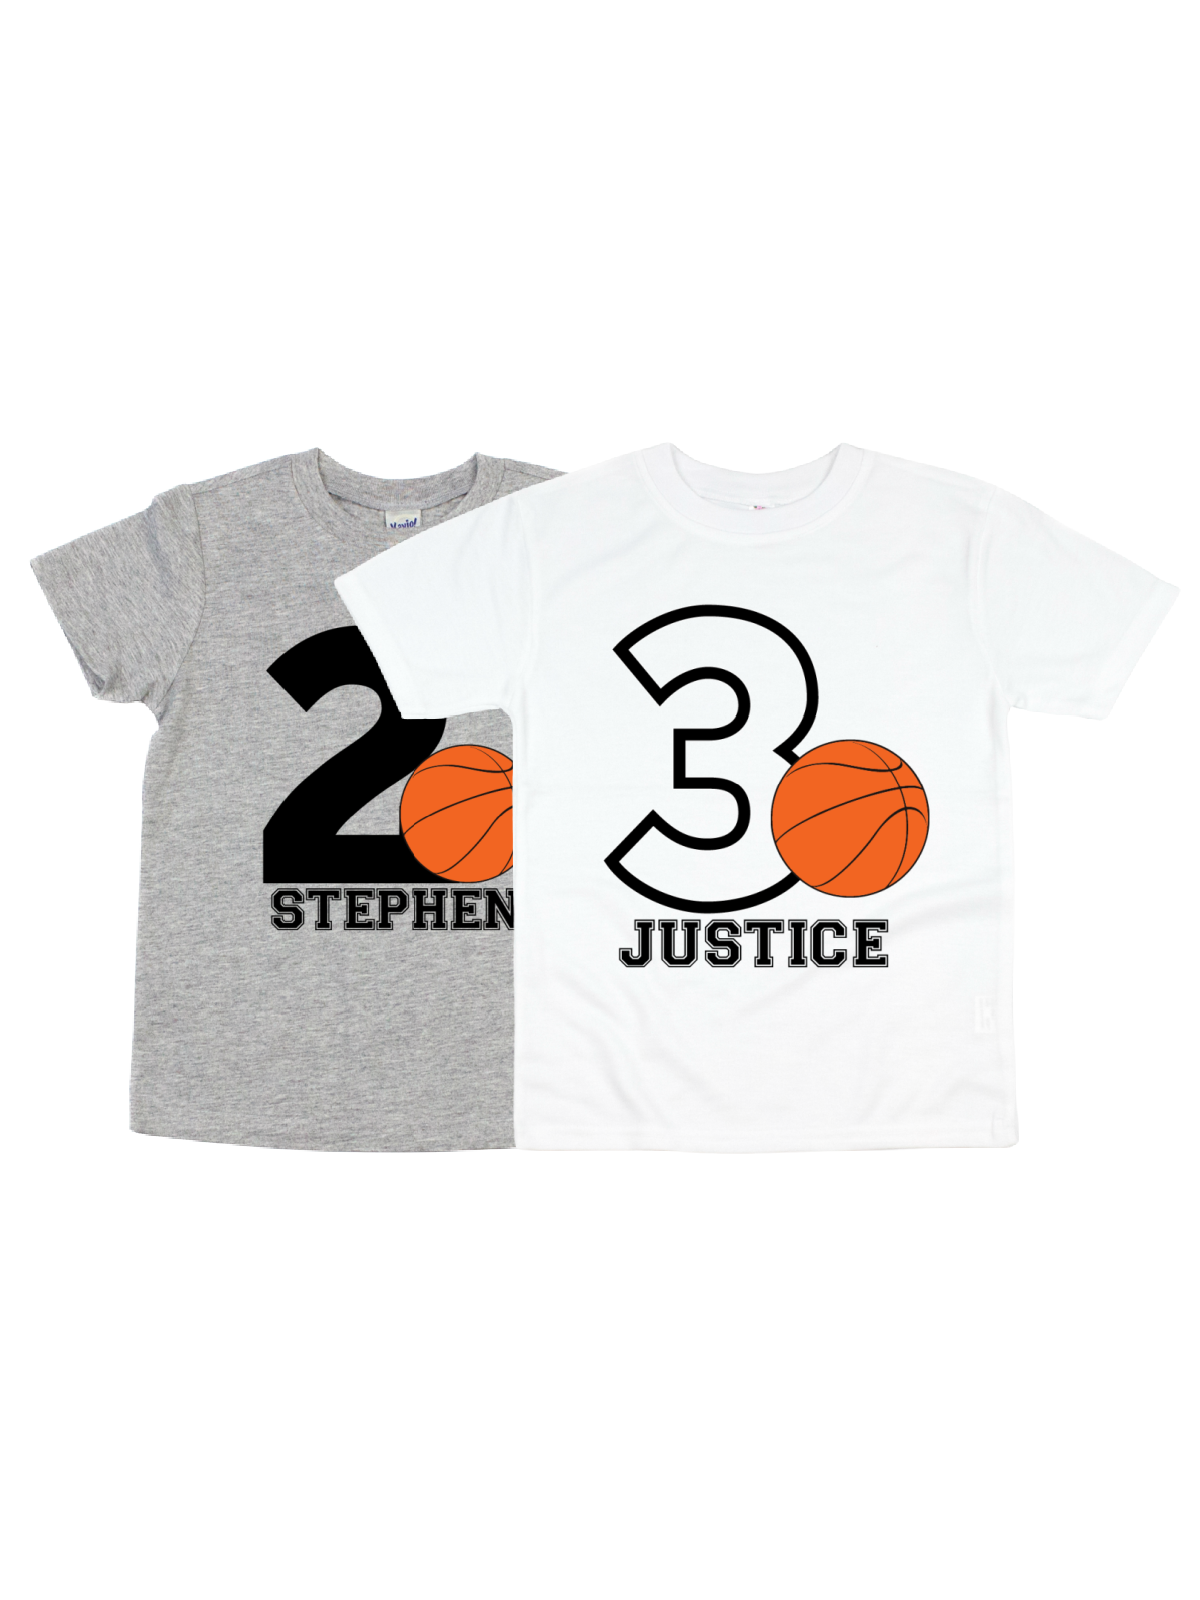 boys basketball shirt designs